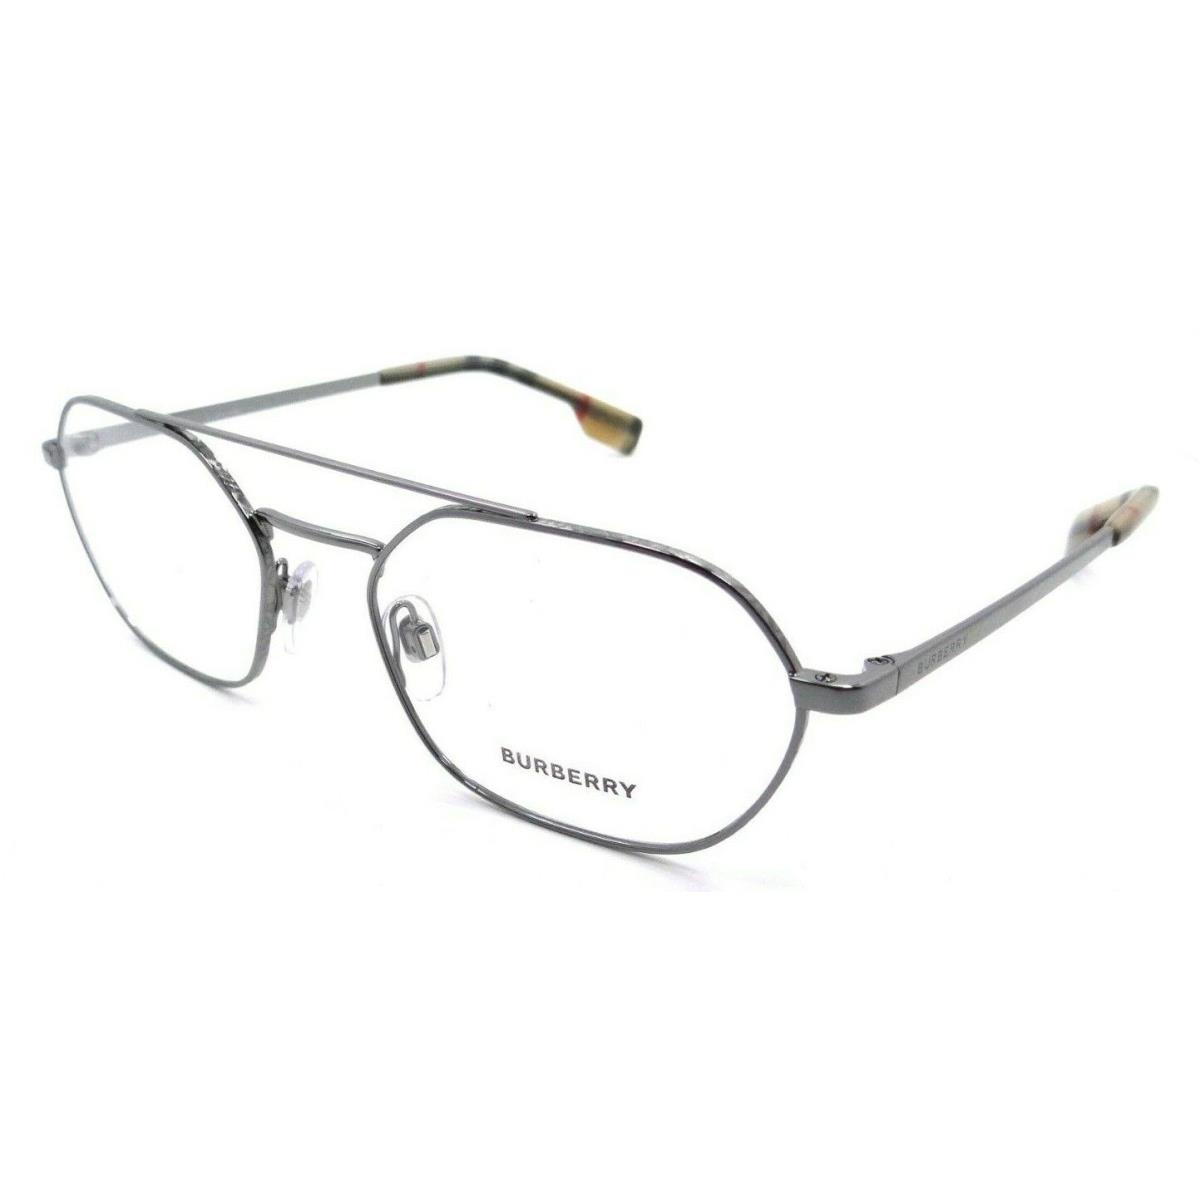 Burberry Eyeglasses Frames BE 1351 1003 55-19-145 Gunmetal Made in Italy